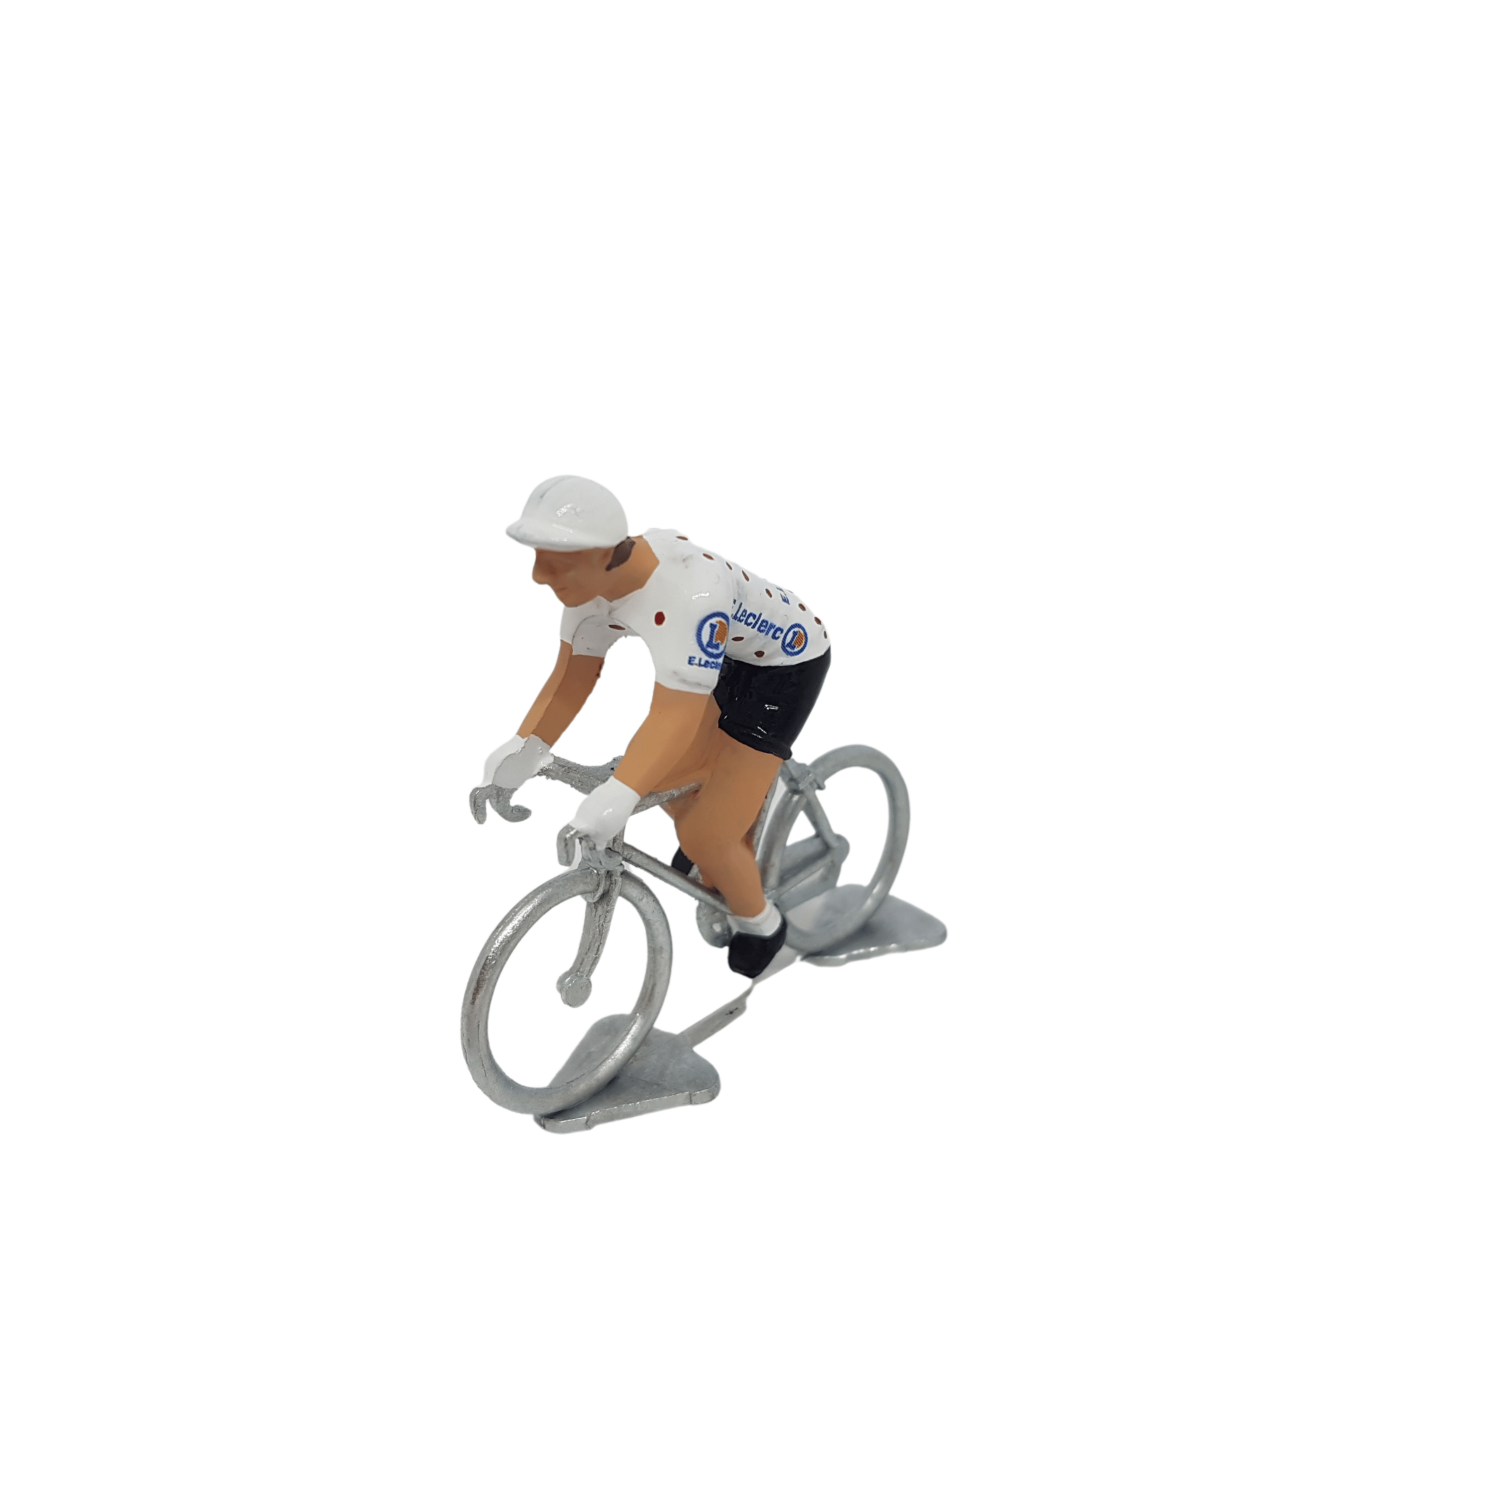 Figurine Cycliste Tour de France Pois